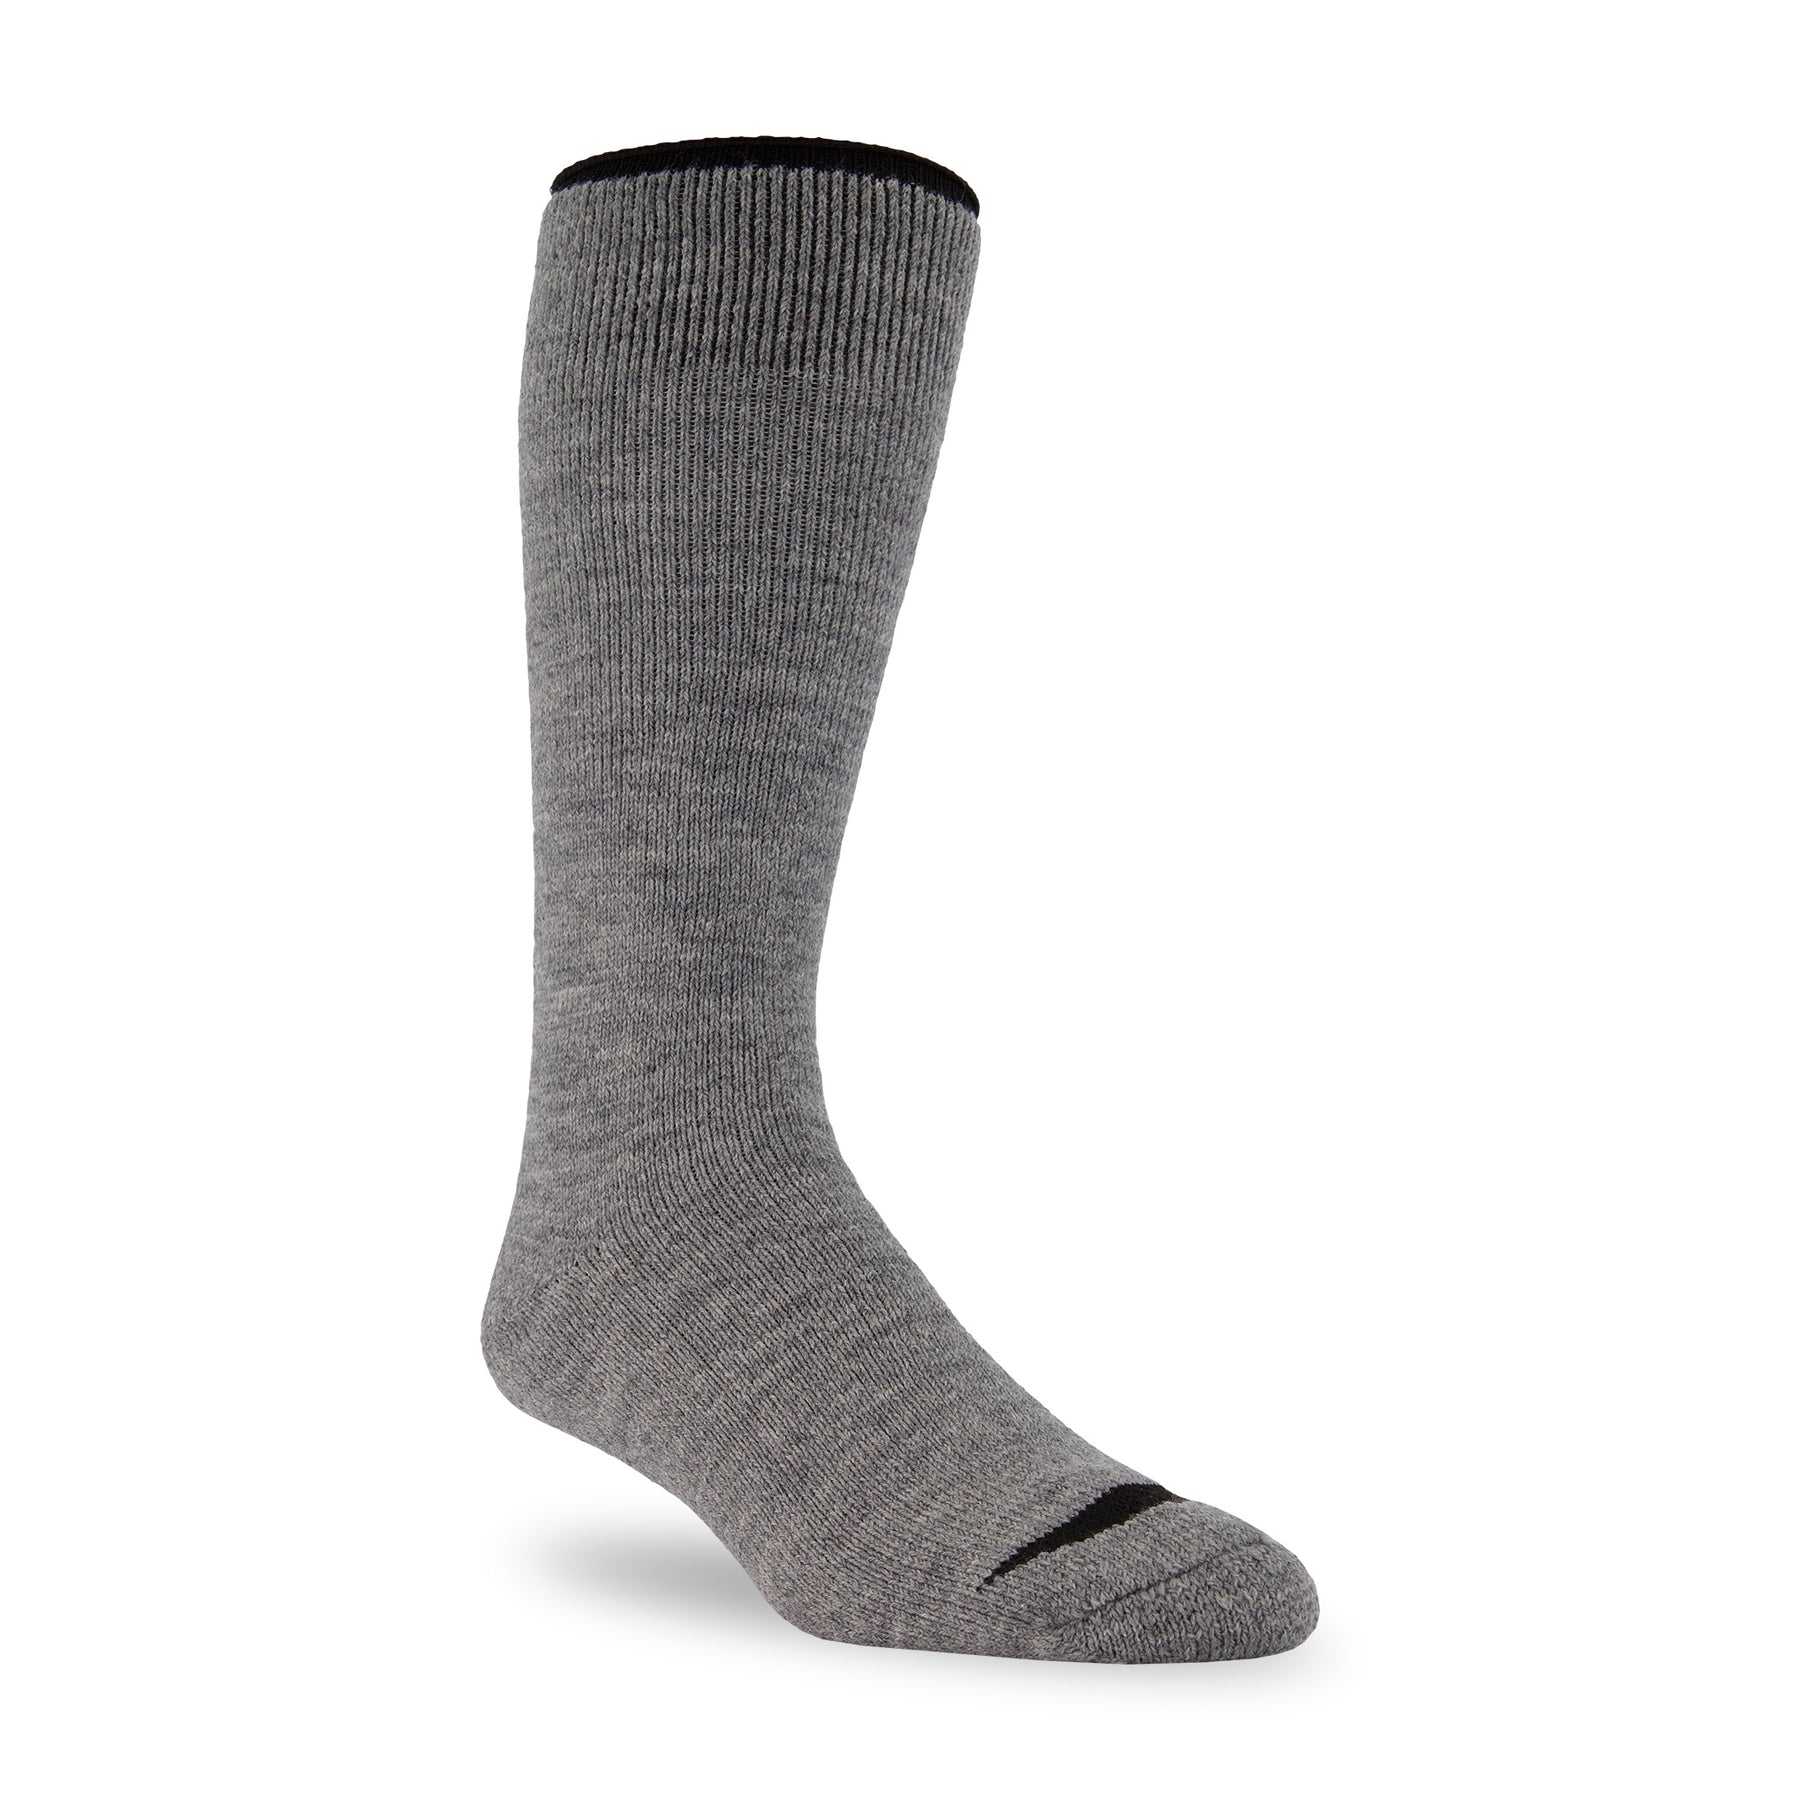 Thermal Socks - 30 Below Classic - Shop Online at CAA Manitoba